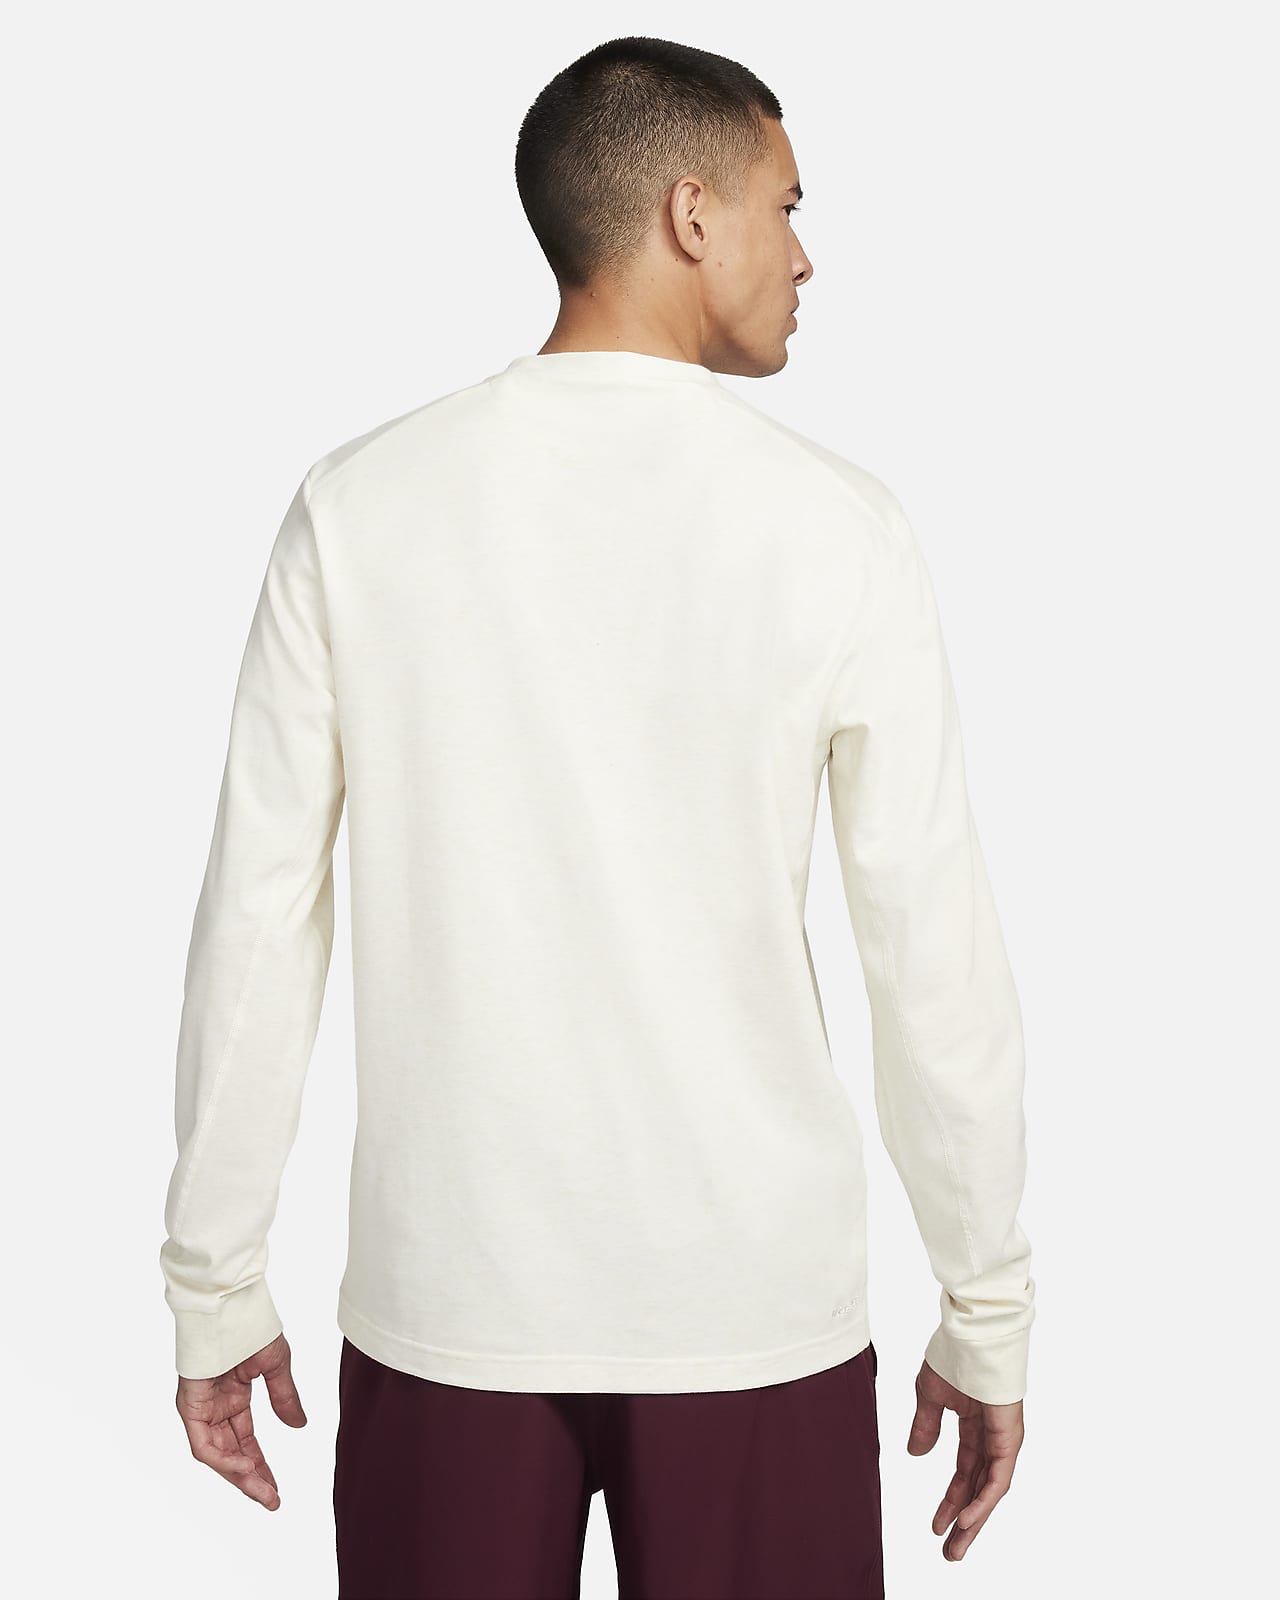 Nike Training Dri-FIT Superset half-zip long sleeve top in gray